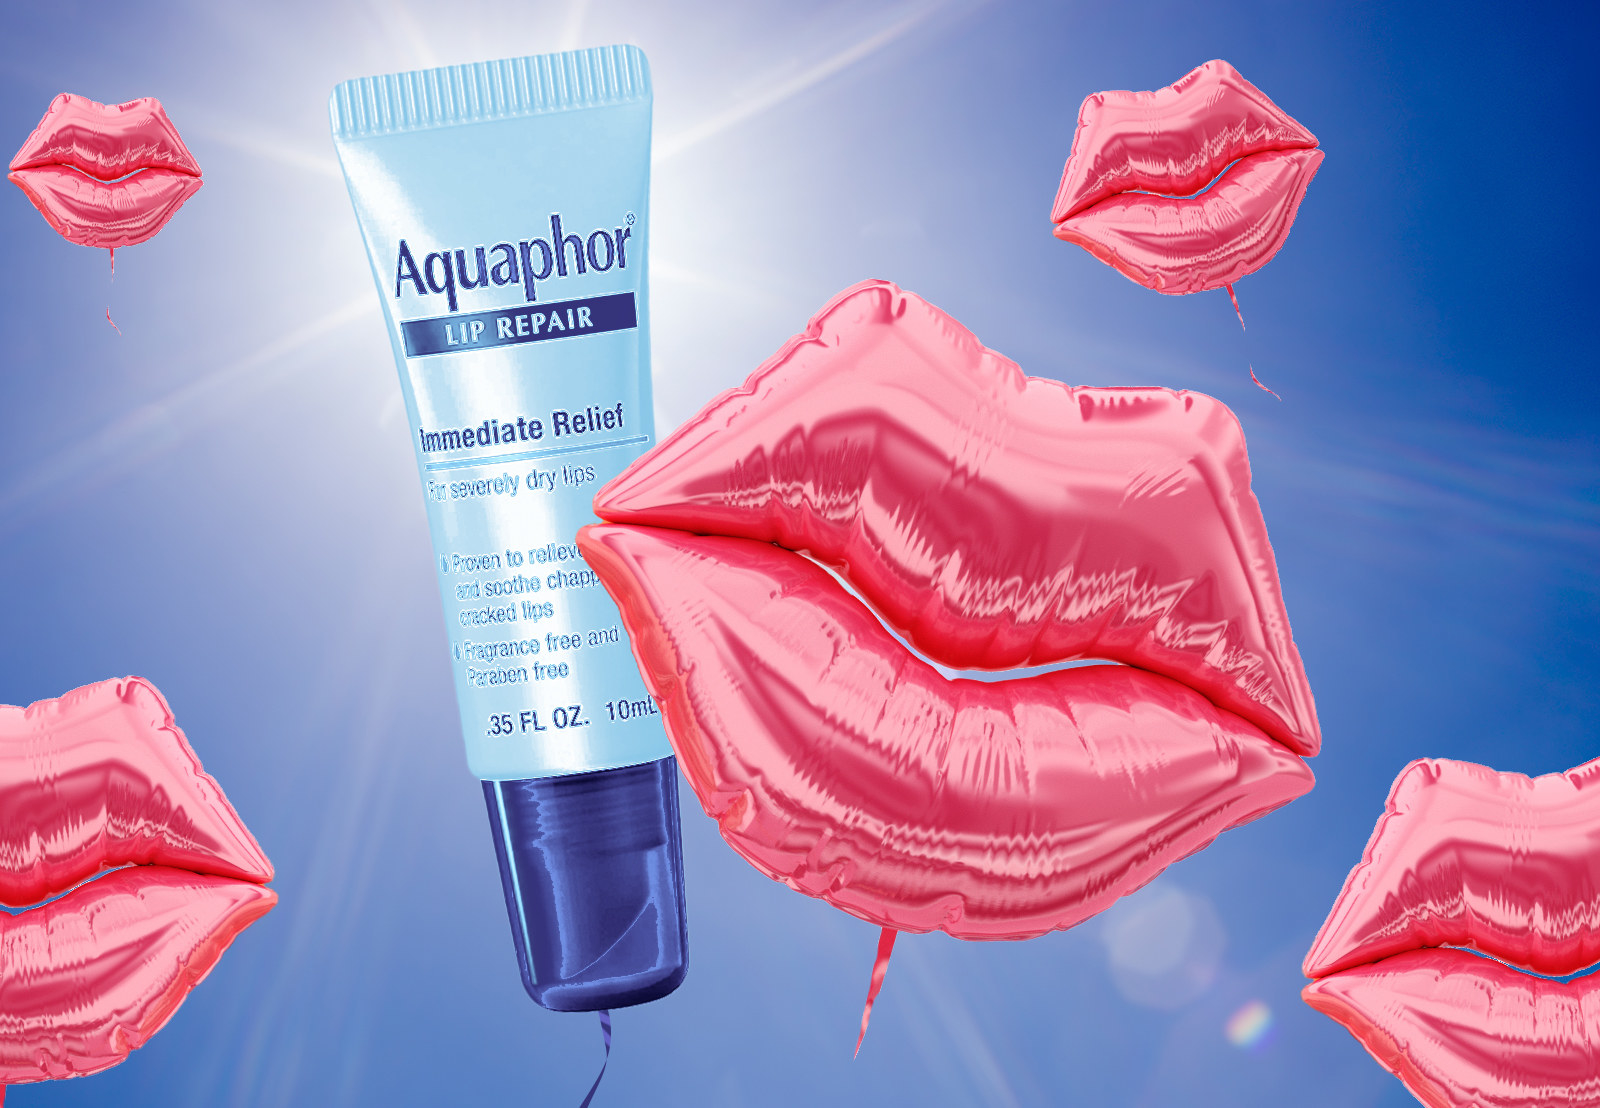 pómulo físicamente Abandono Can Aquaphor Cause Lip Sunburns? We Asked Experts